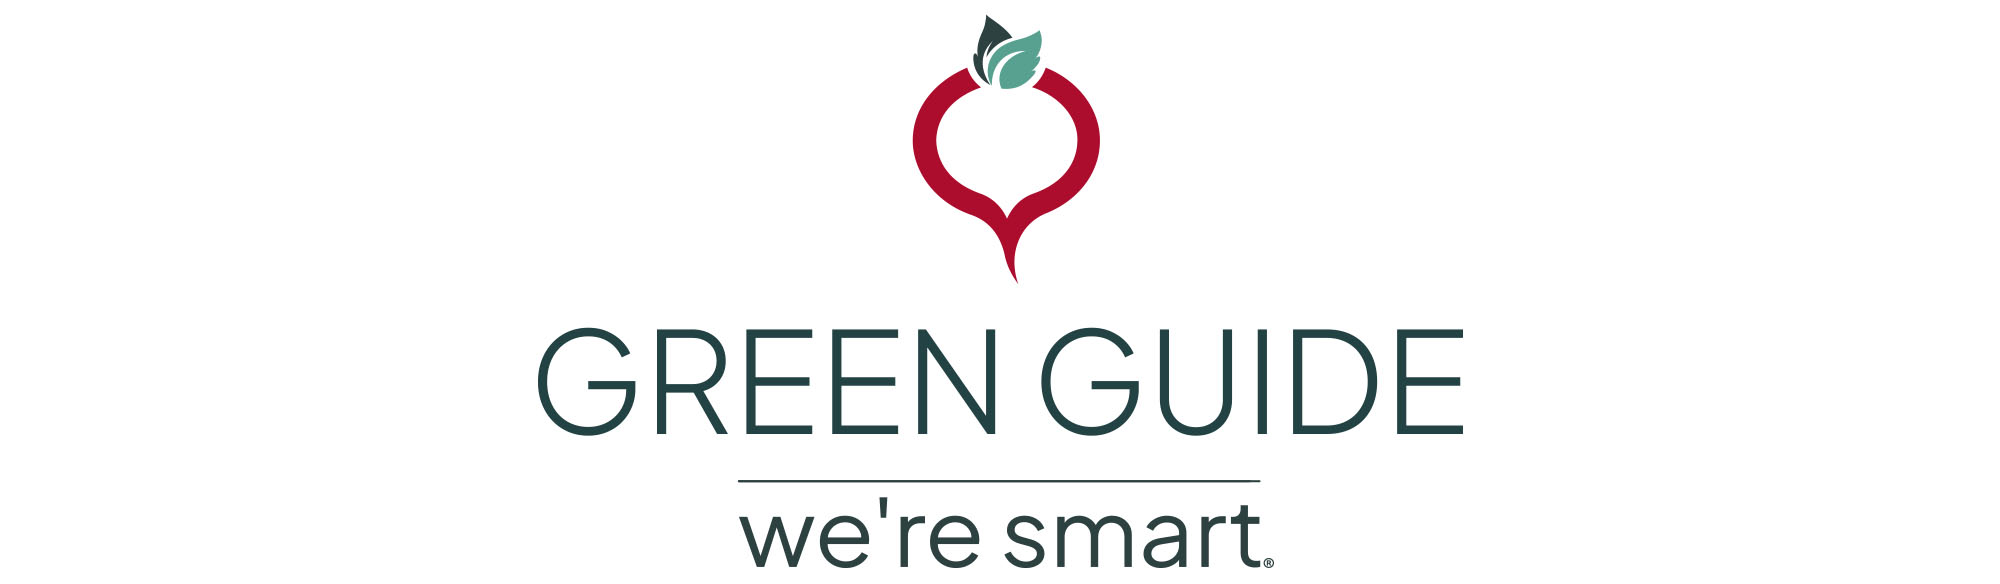 We're Smart Green Guide logo